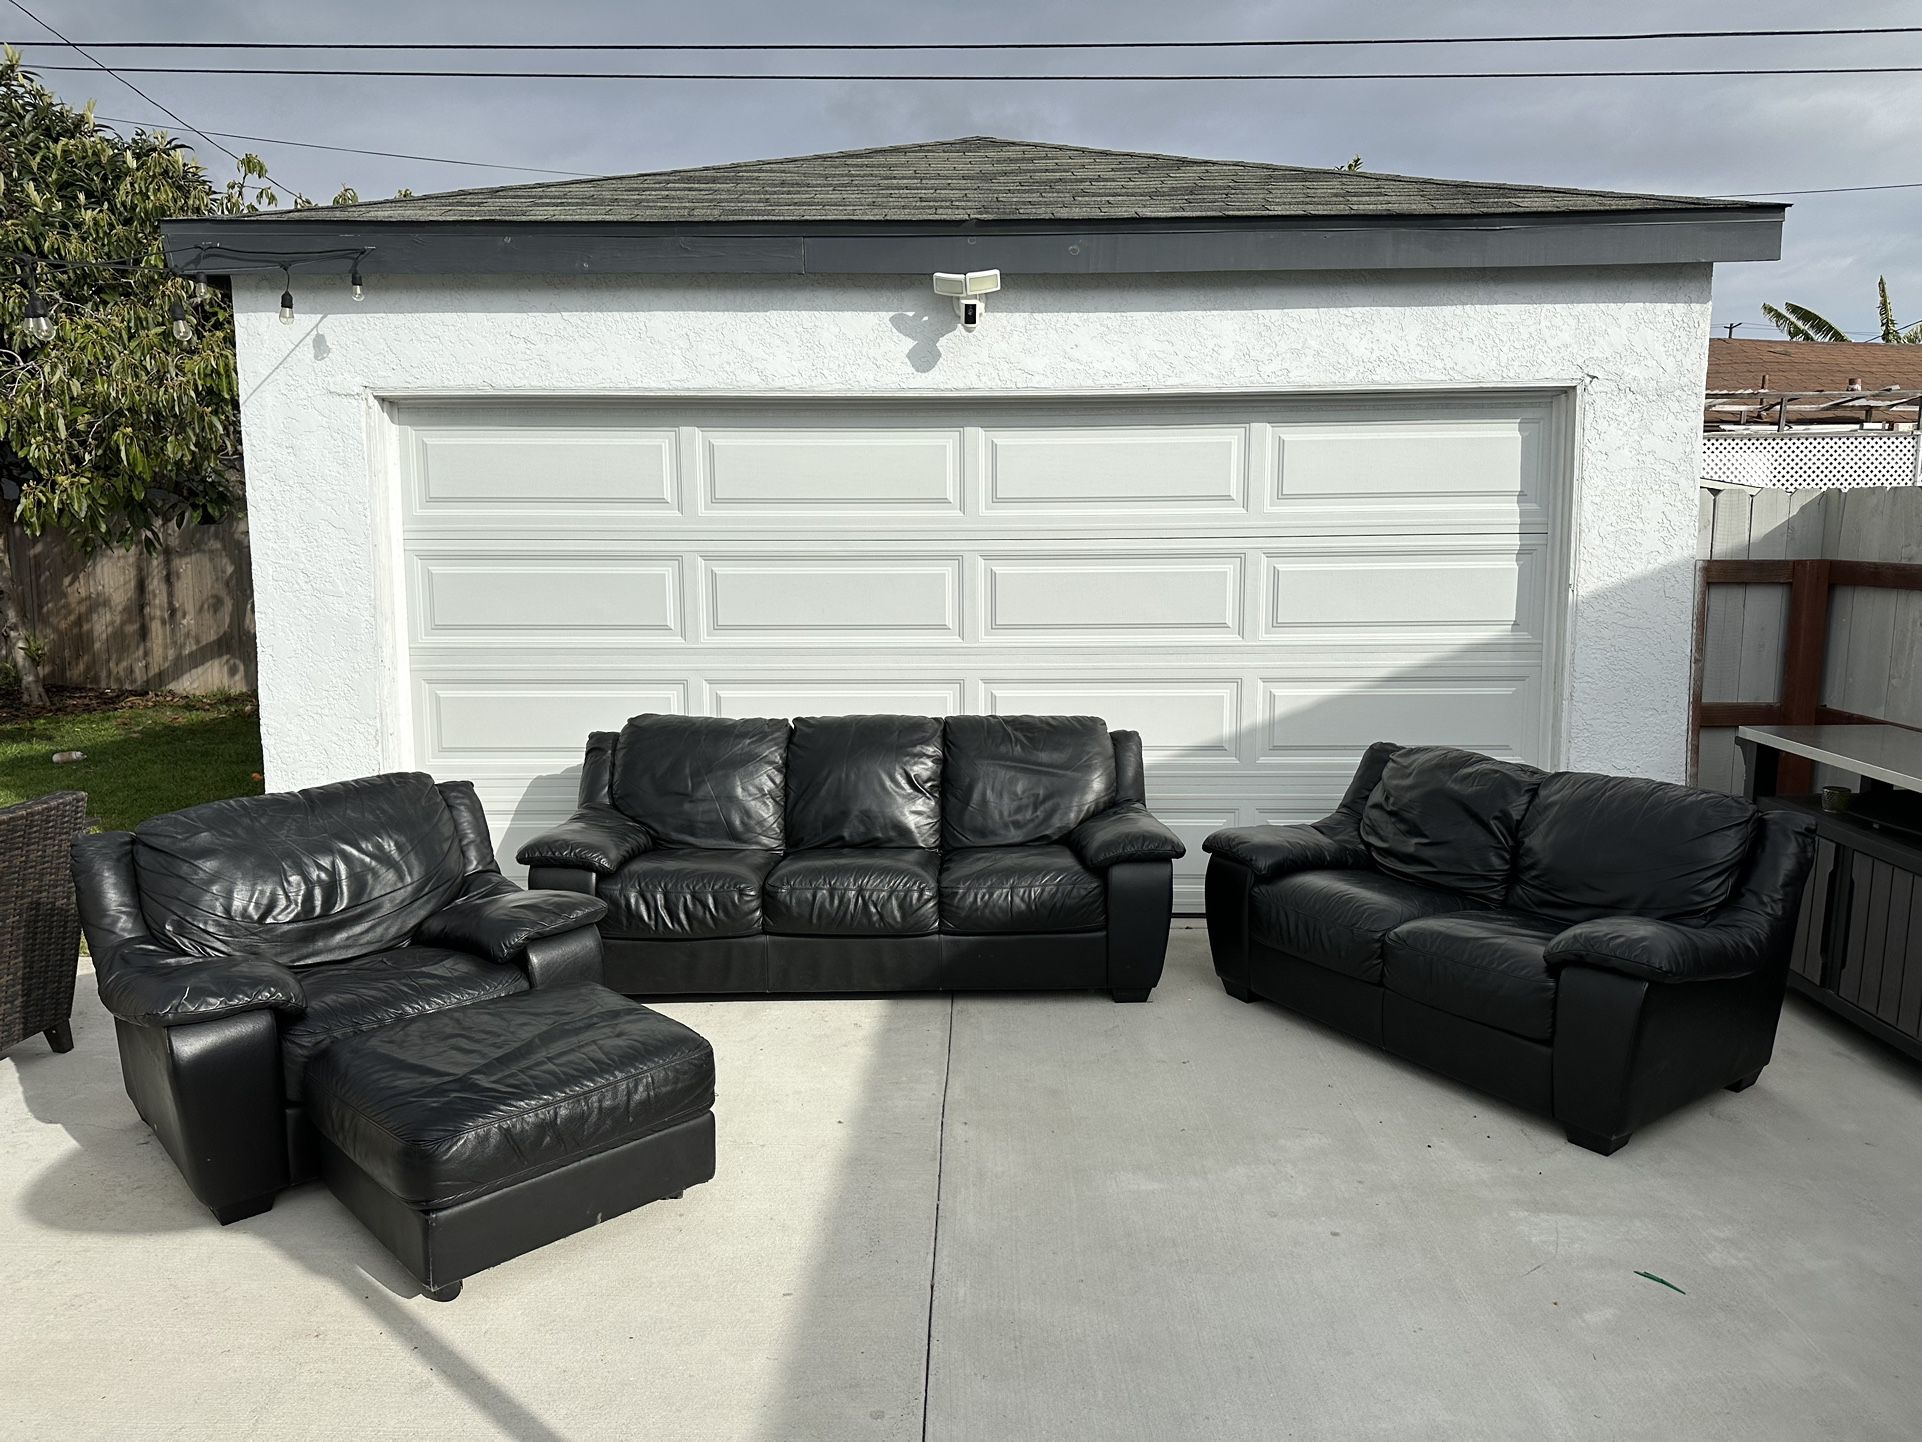 4 Piece Black Leather Sofa & Chair Set